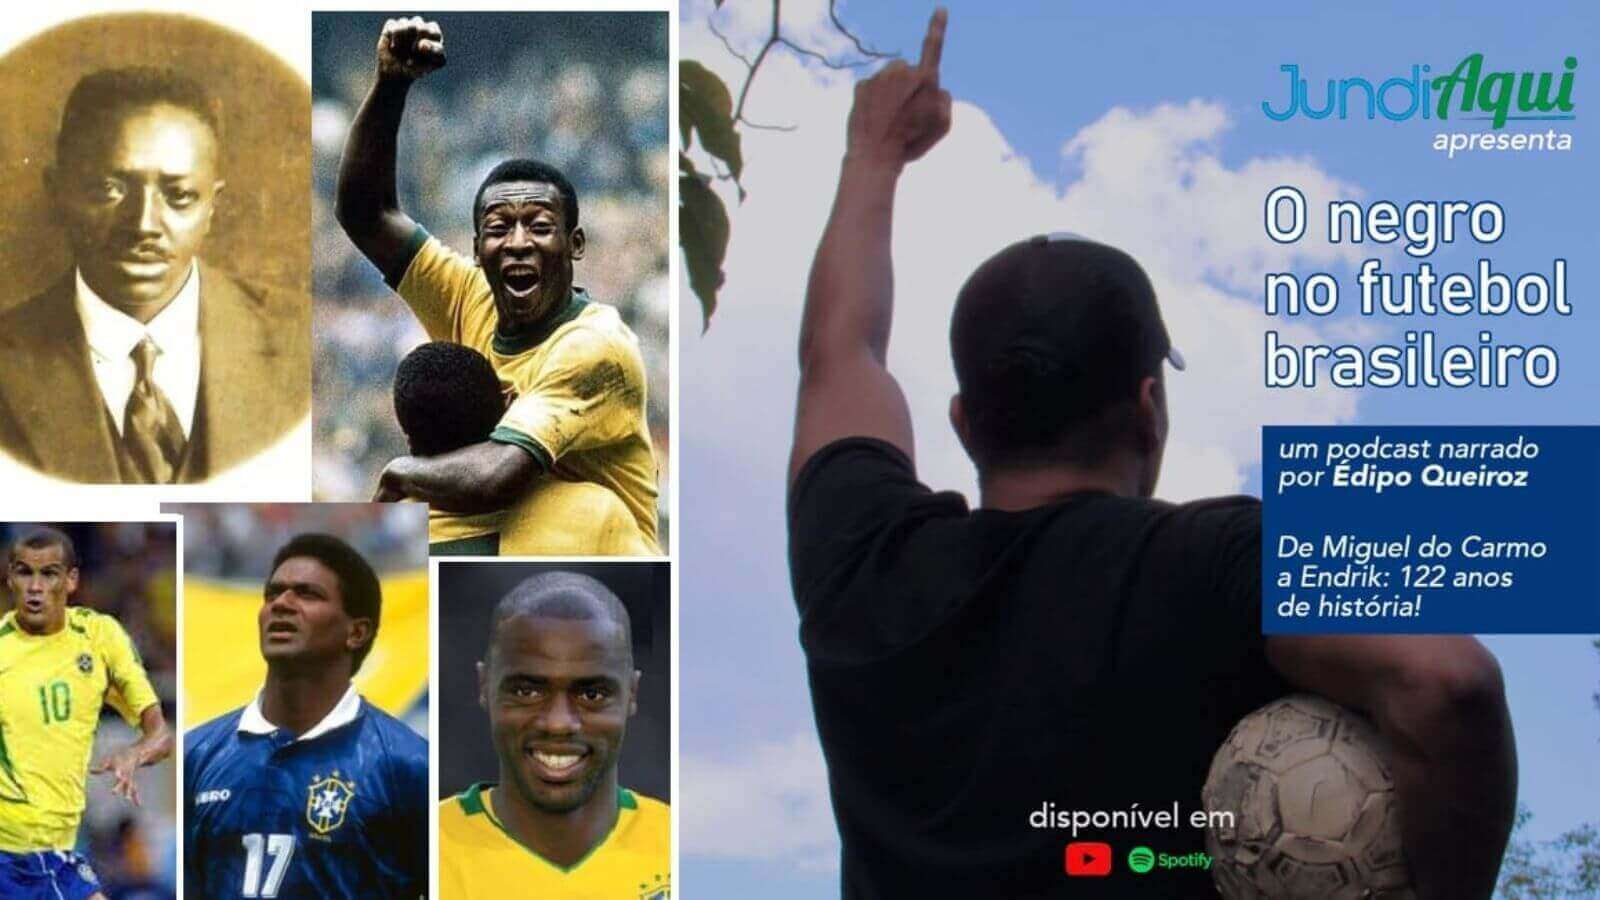 O Negro no Futebol Brasileiro